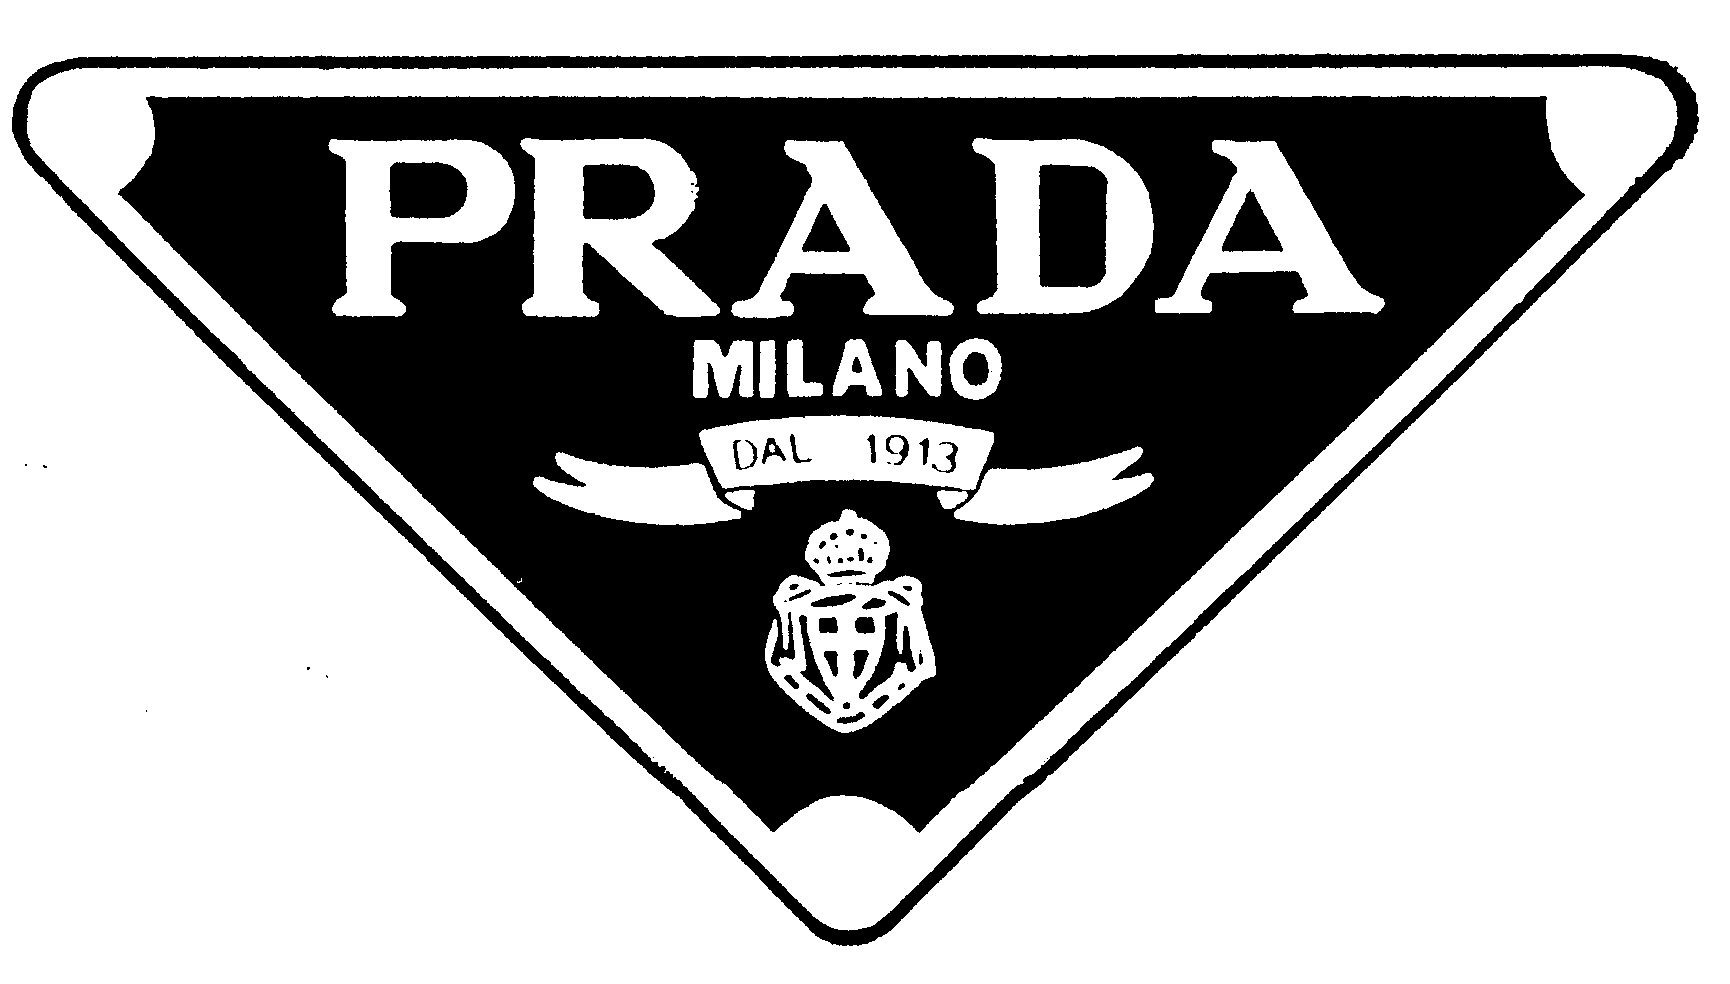 PRADA MILANO DAL 1913 - Prada . Trademark Registration